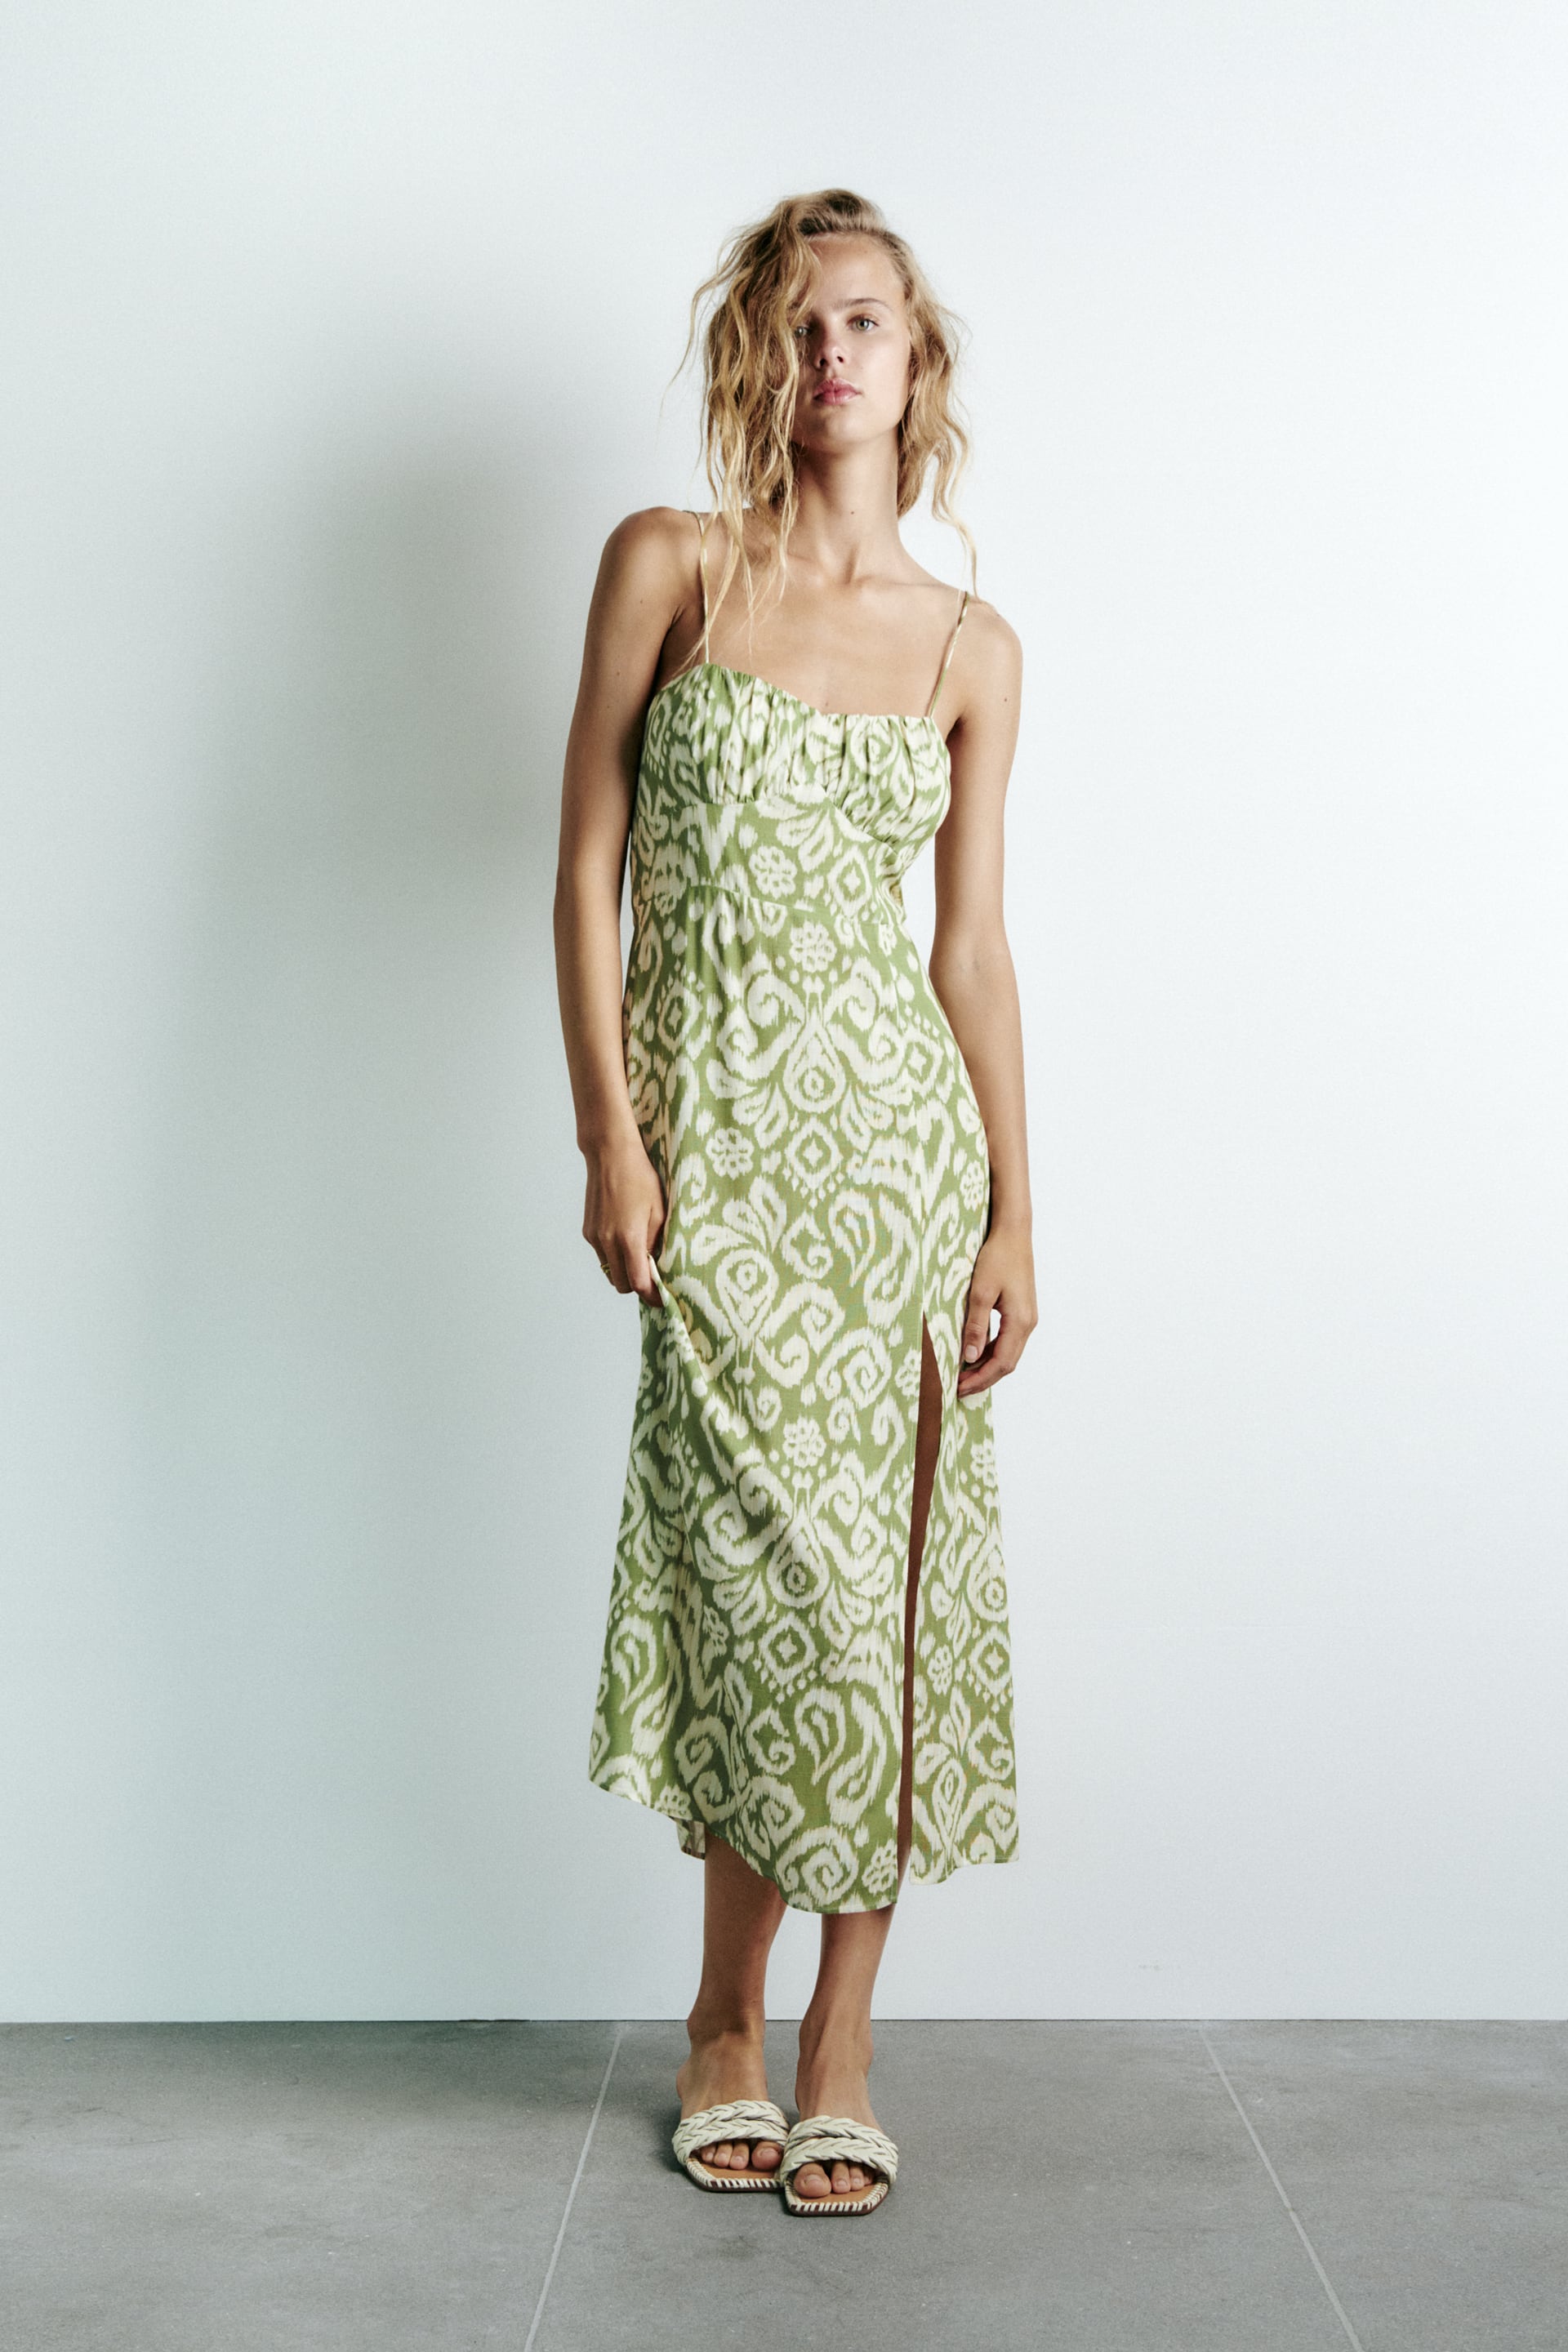 Zara Printed Corsetry-Inspired Dress